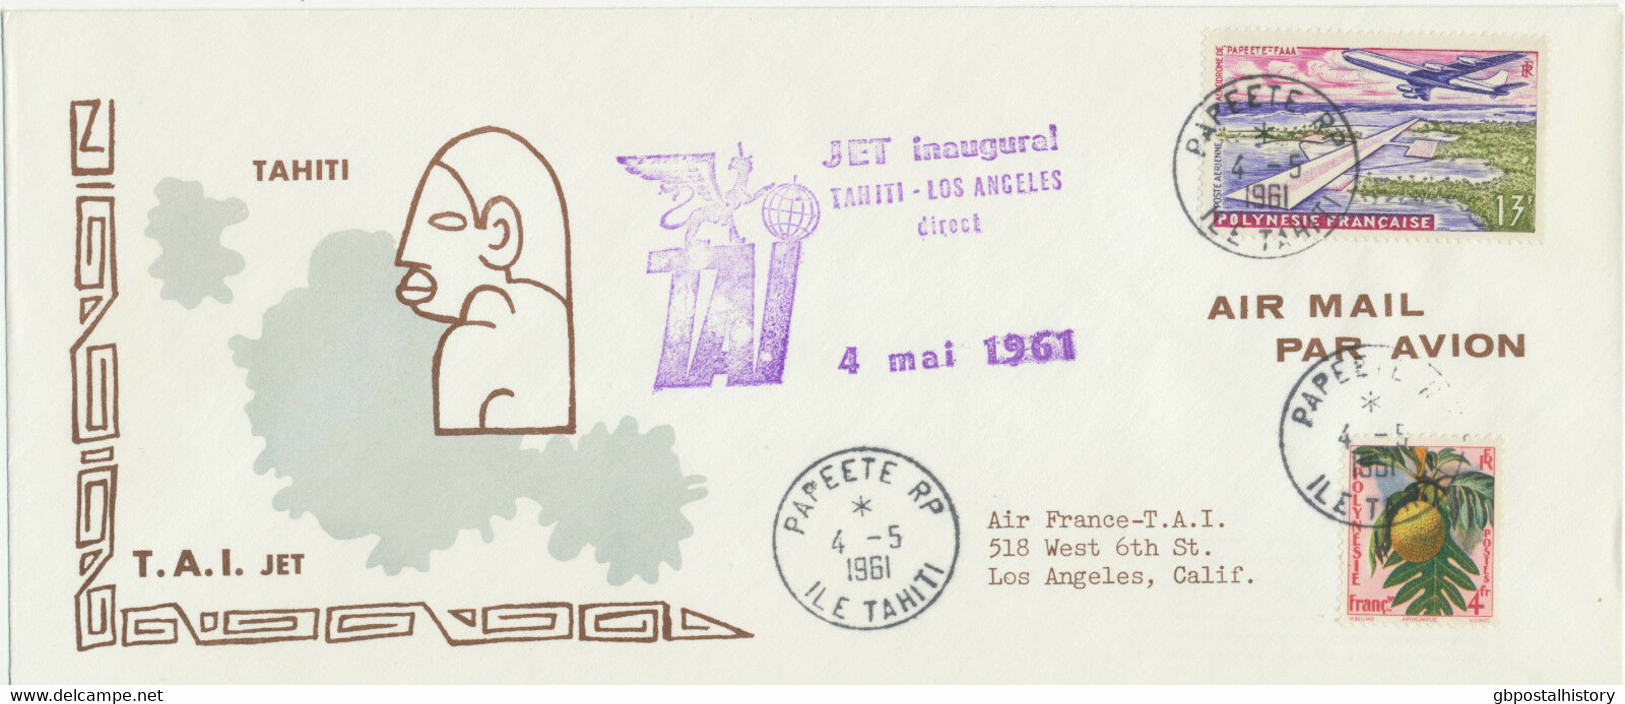 FRENCH POLYNESIA 1961 FF PAPEETE Tahiti, FRENCH POLYNESIA – LOS ANGELES USA - Cartas & Documentos